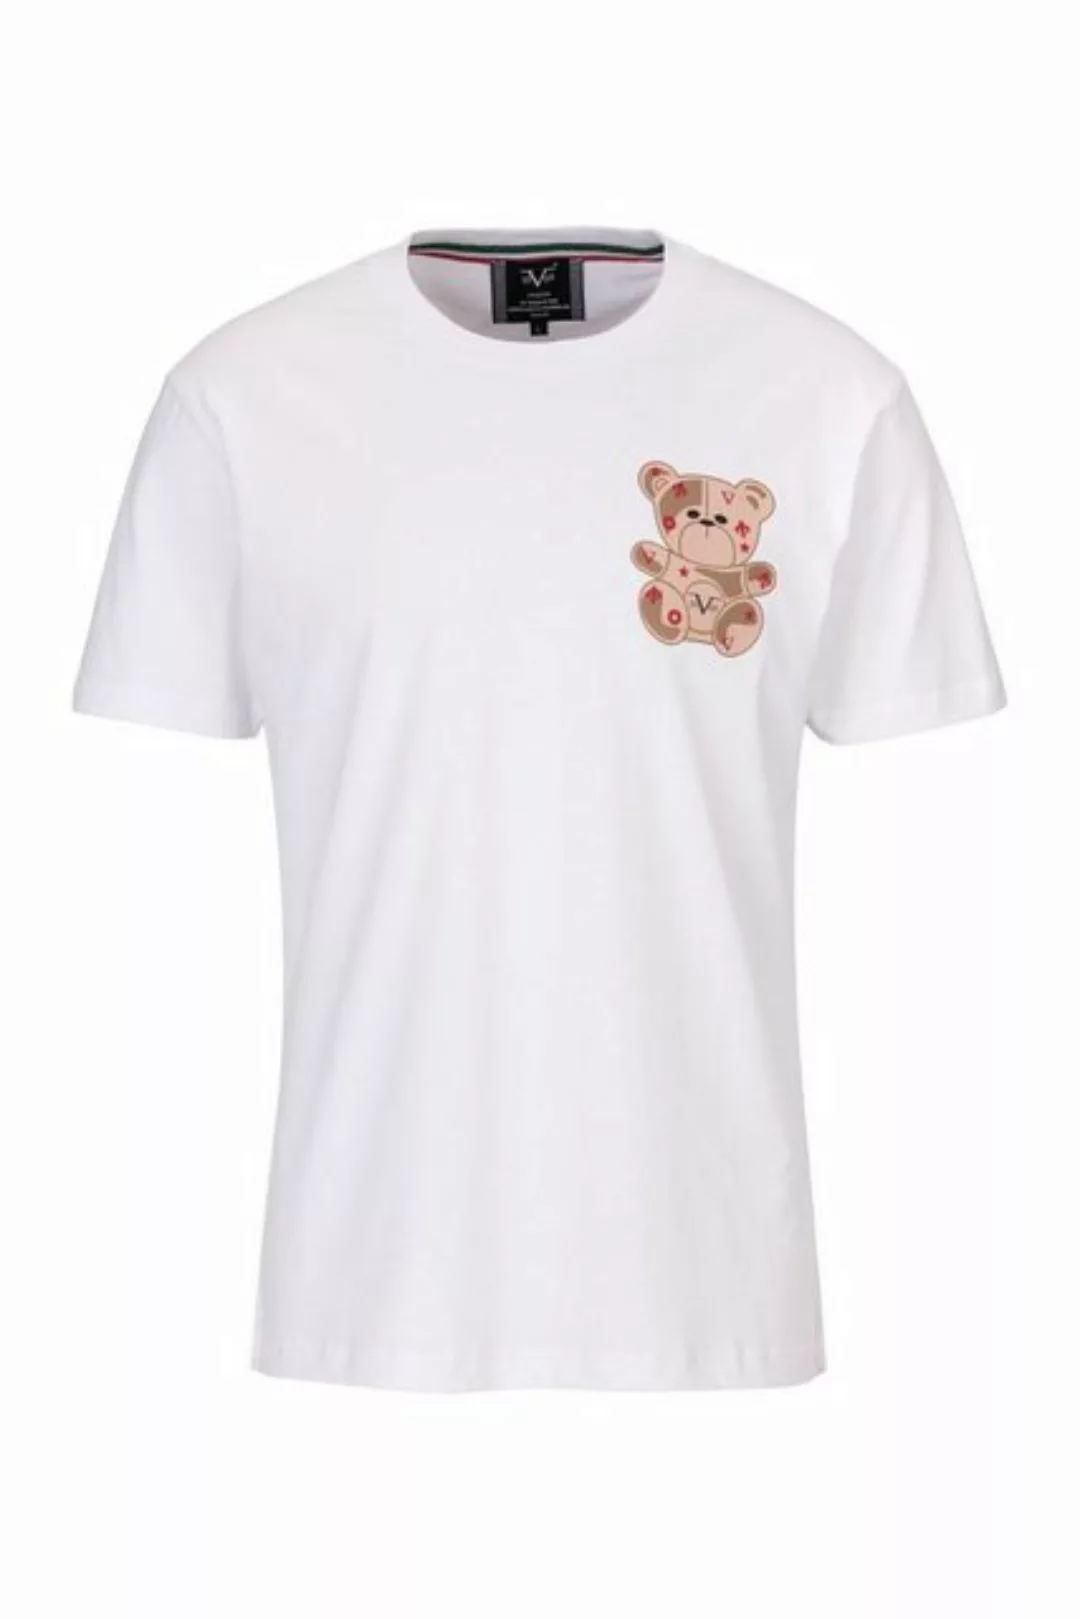 19V69 Italia by Versace T-Shirt Teddy Print günstig online kaufen